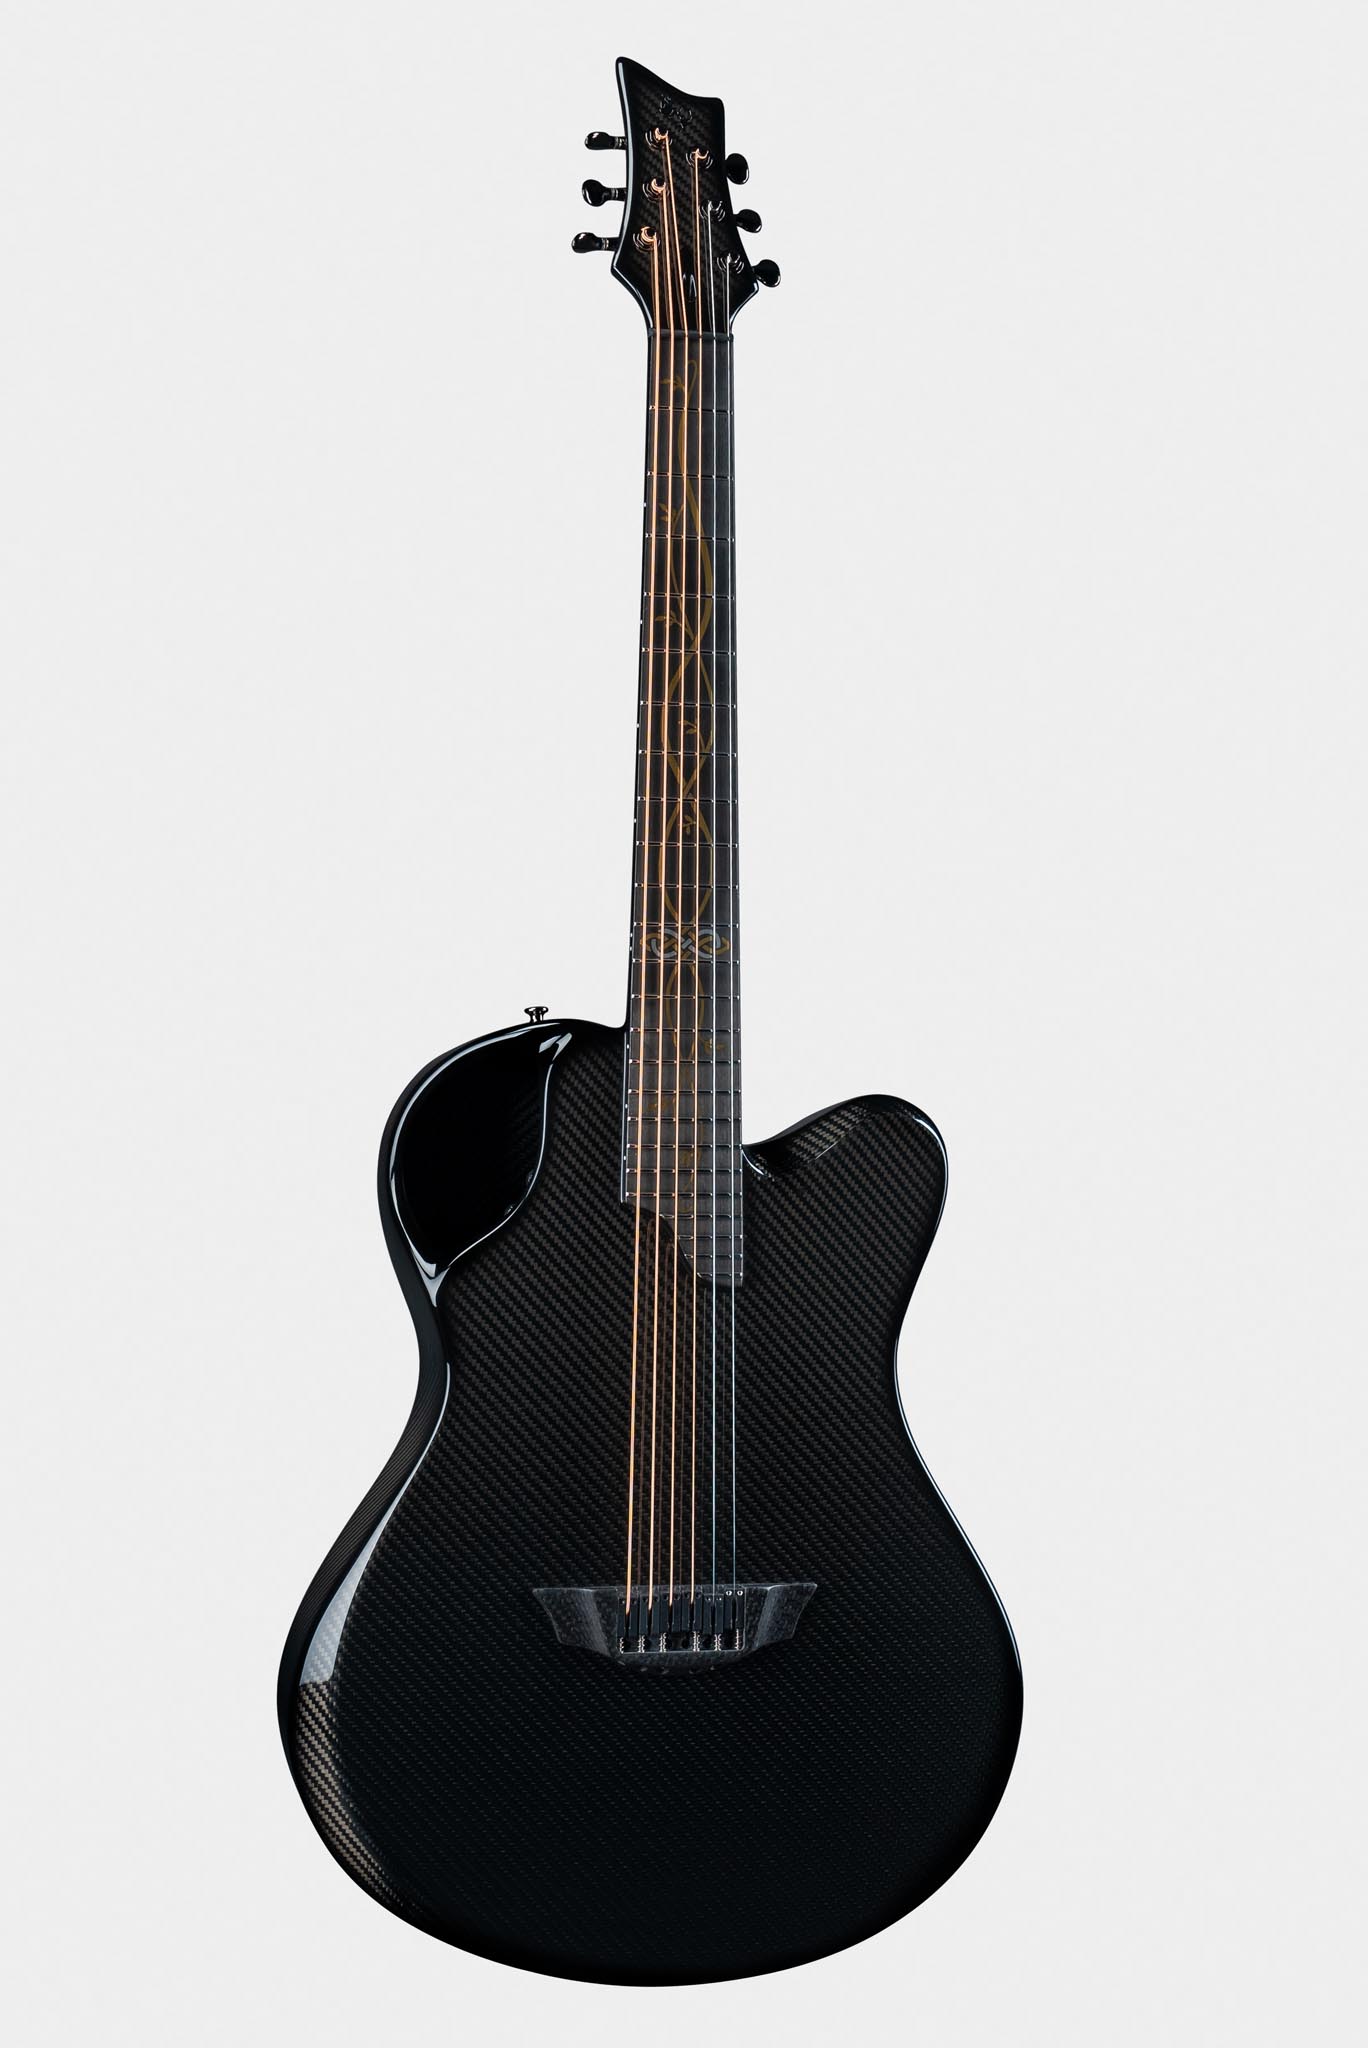 Emerald X20 Carbon Fiber Guitar with Black Finish